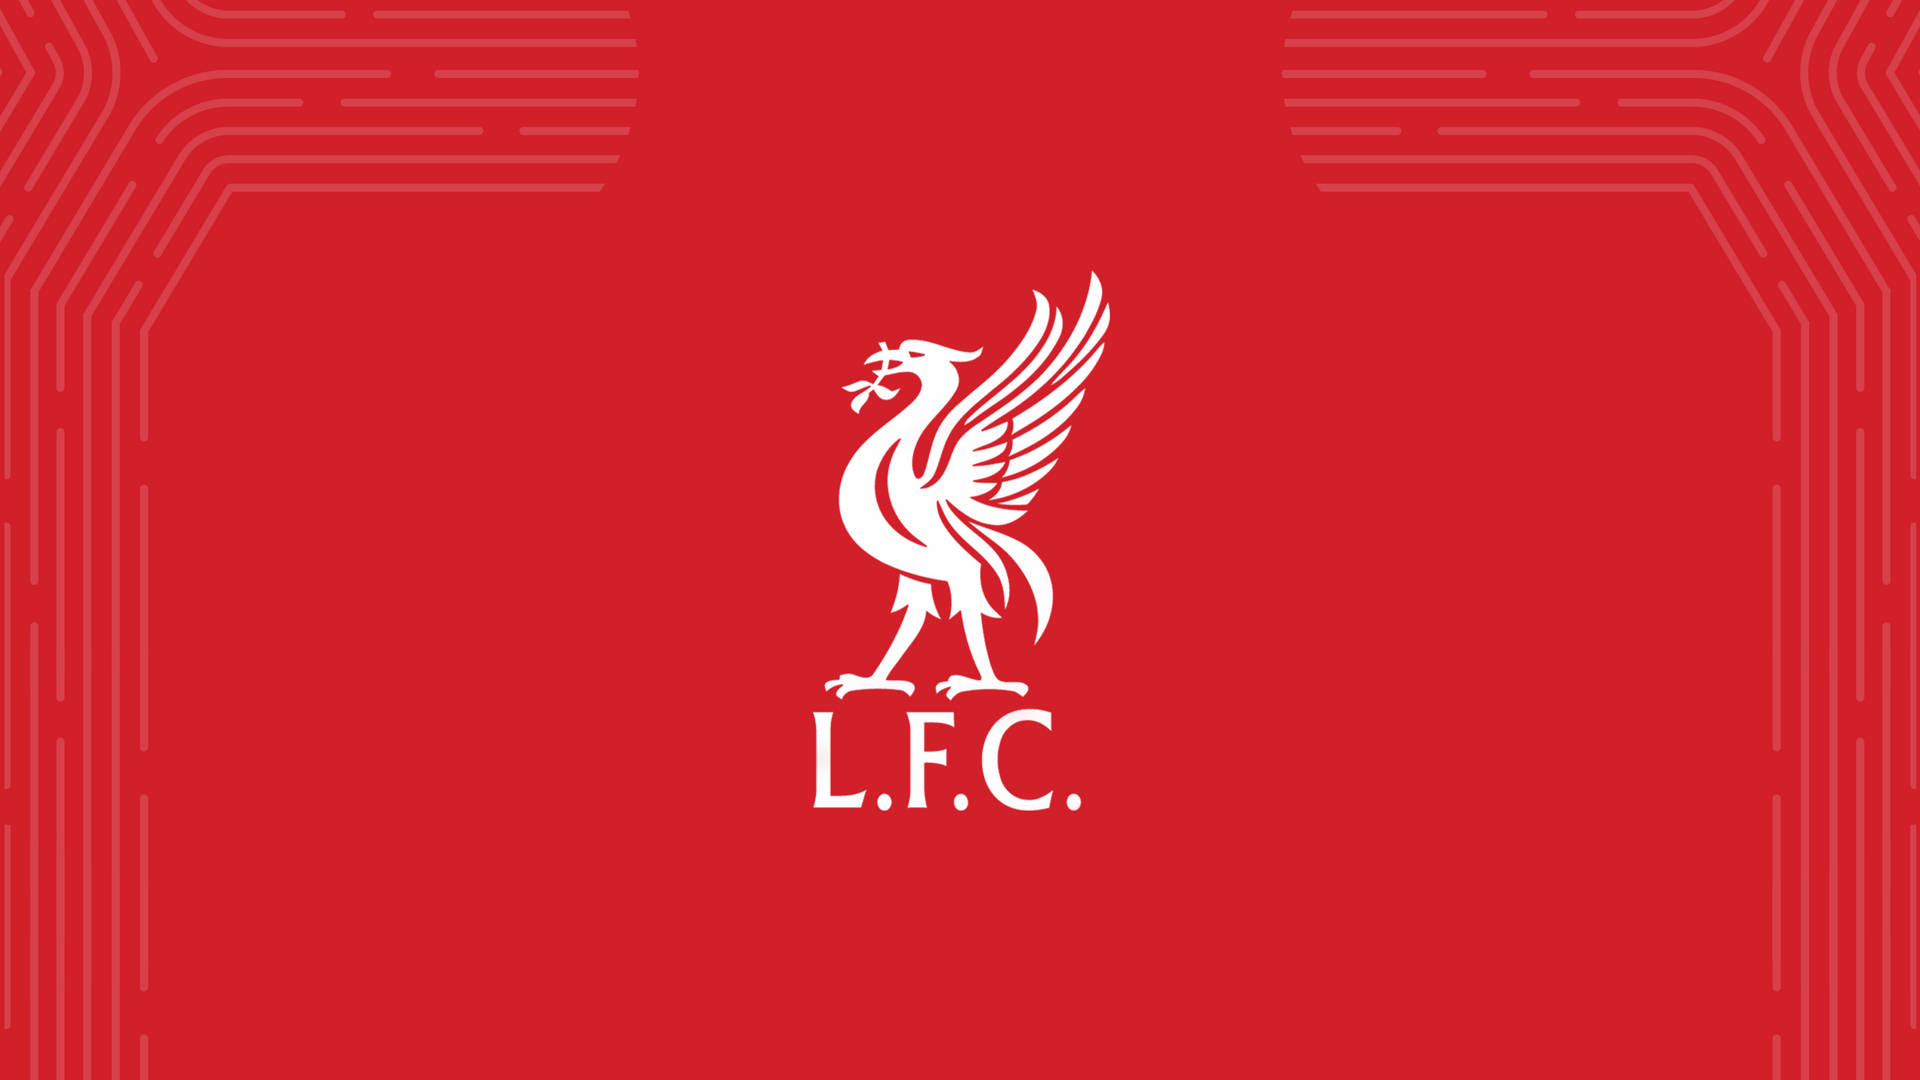 Liverpool Fc L.f.c. Background